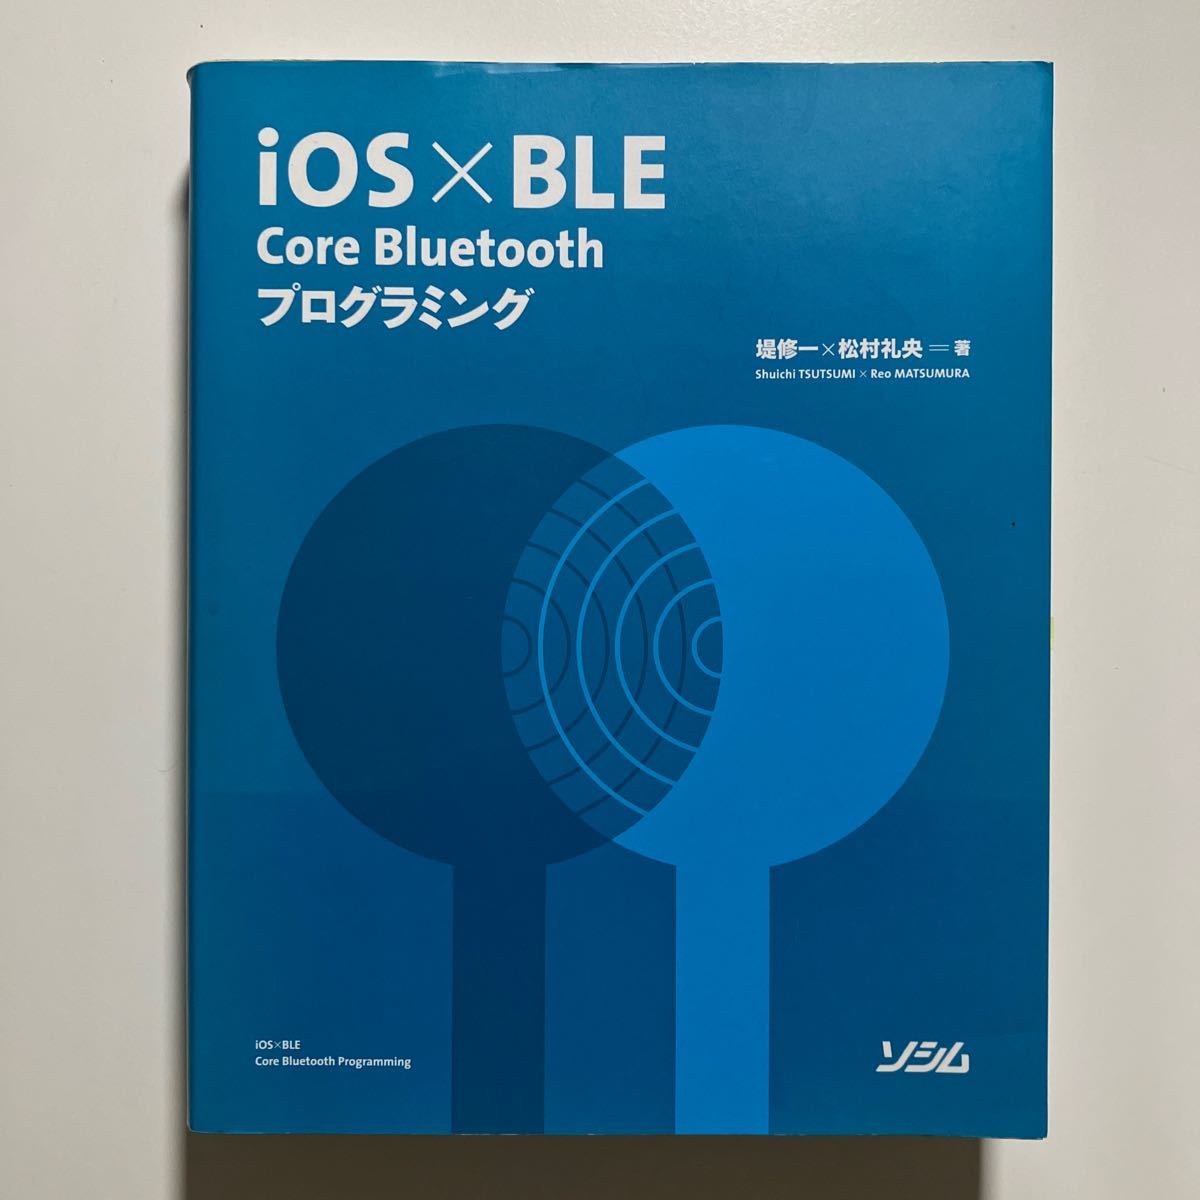 iOS x BLE Core Bluetooth プログラミング　堤修一x松村礼央著_画像1